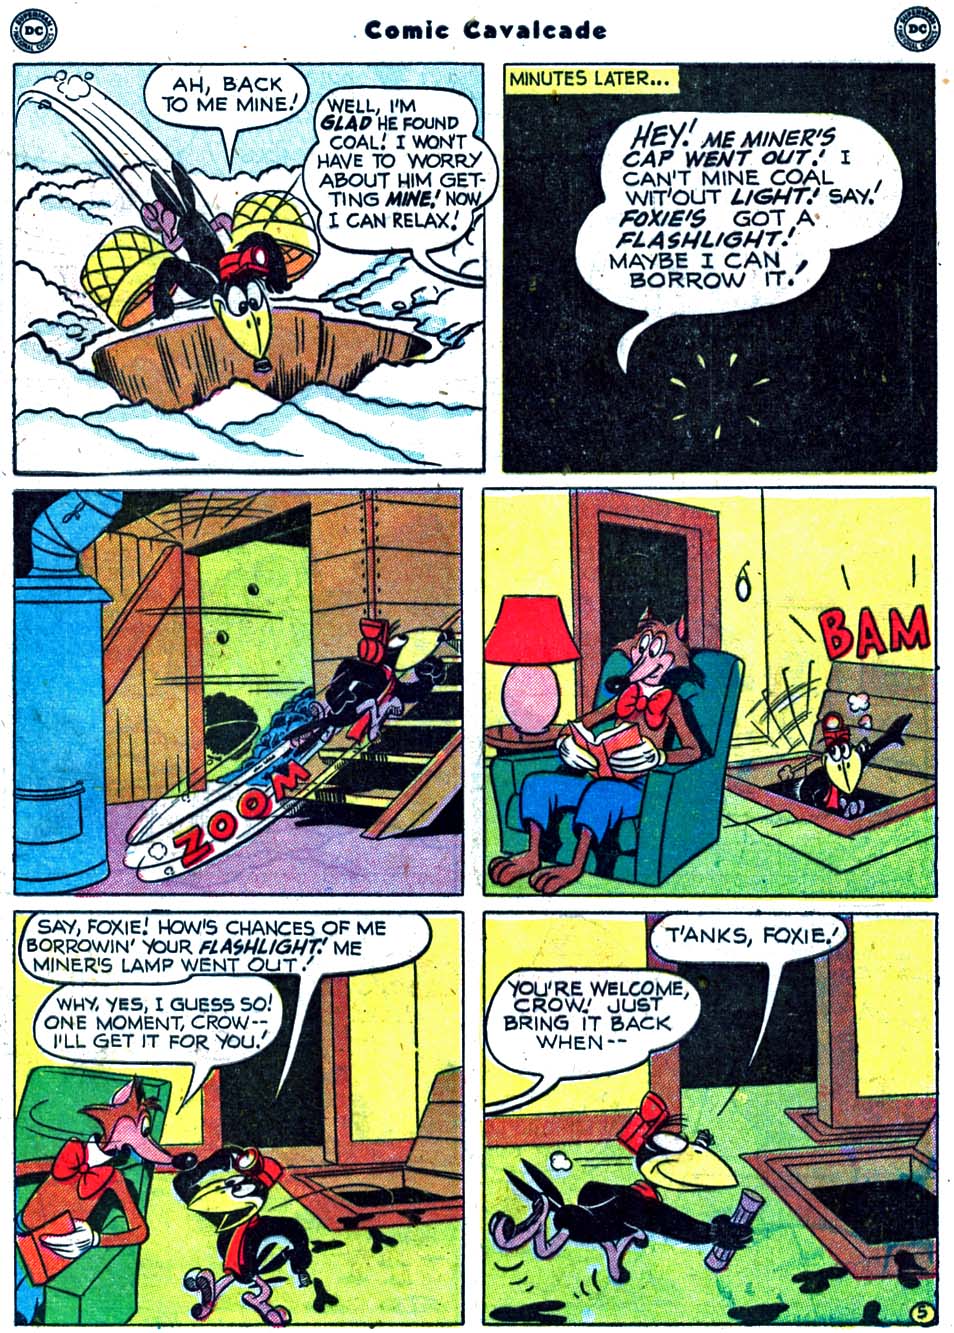 Comic Cavalcade issue 44 - Page 7